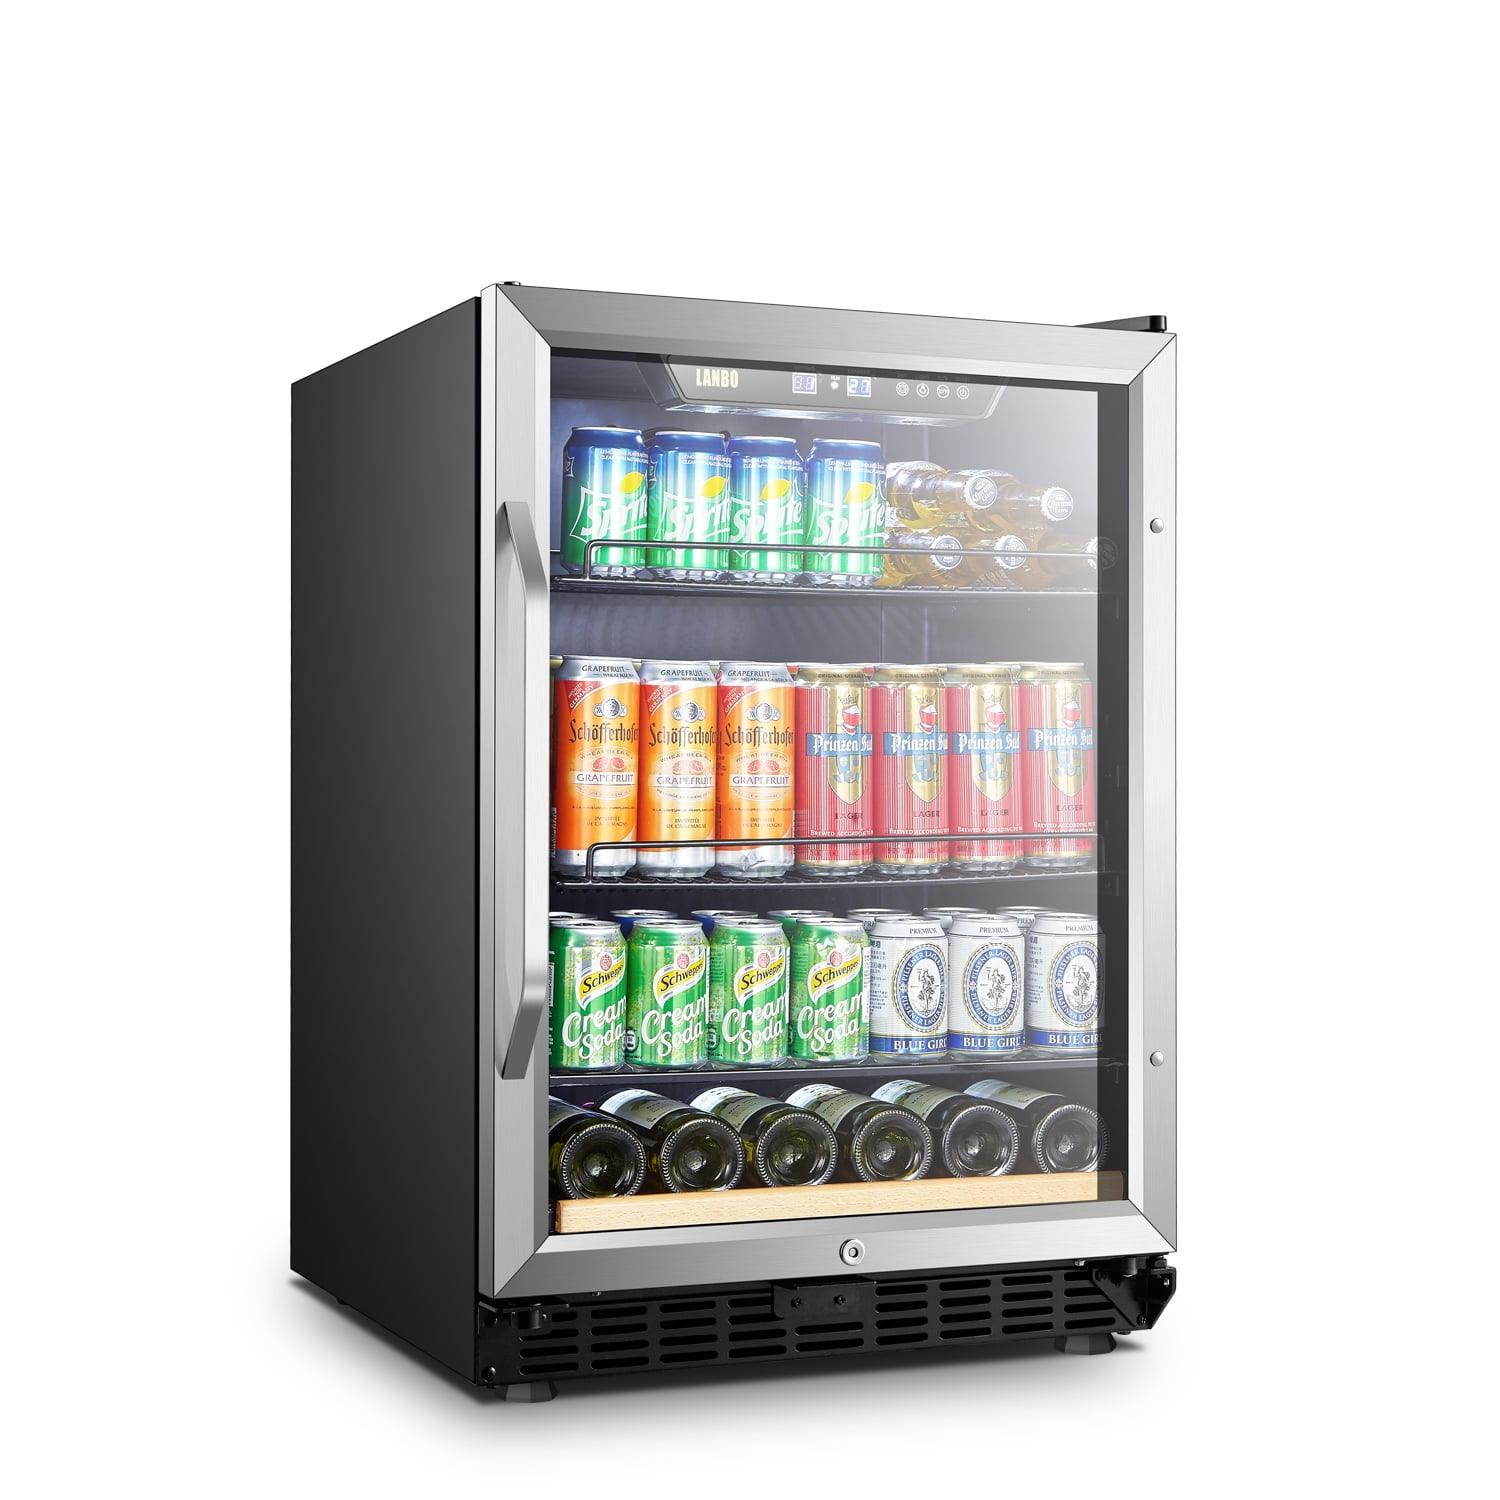 Premium Levella Prfim1257dx Single Glass Door Merchandiser Refrigerator-Freezer with Automatic Ice Maker Display Beverage Cooler-12.5 Cu FT-Black